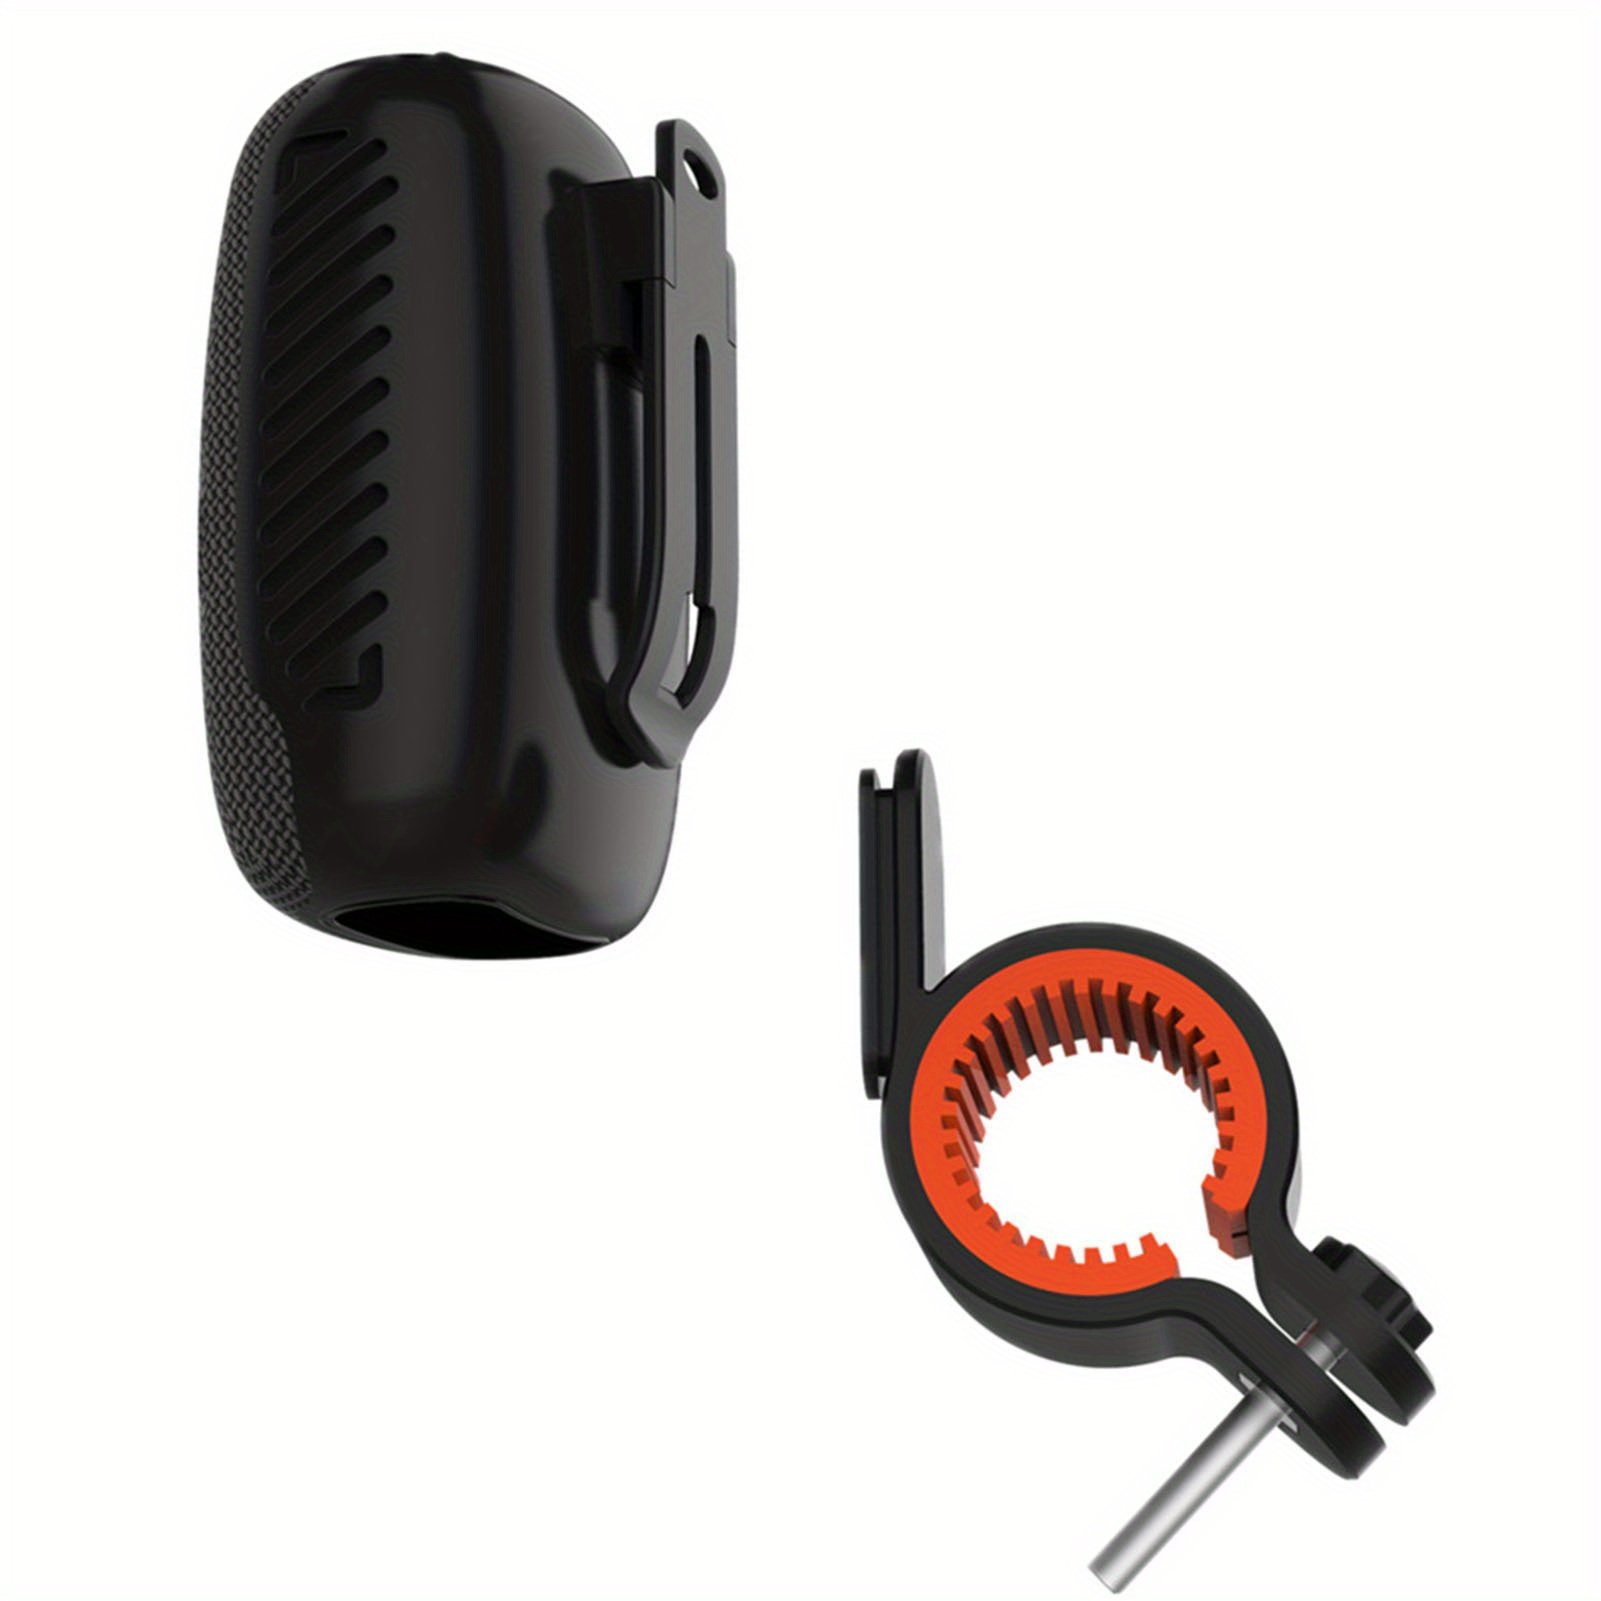 

Bike Speaker Portable Pairing Fm Radio Memory Card Support Speaker For Sports Companionship Cycling Hiking Travel Run Black